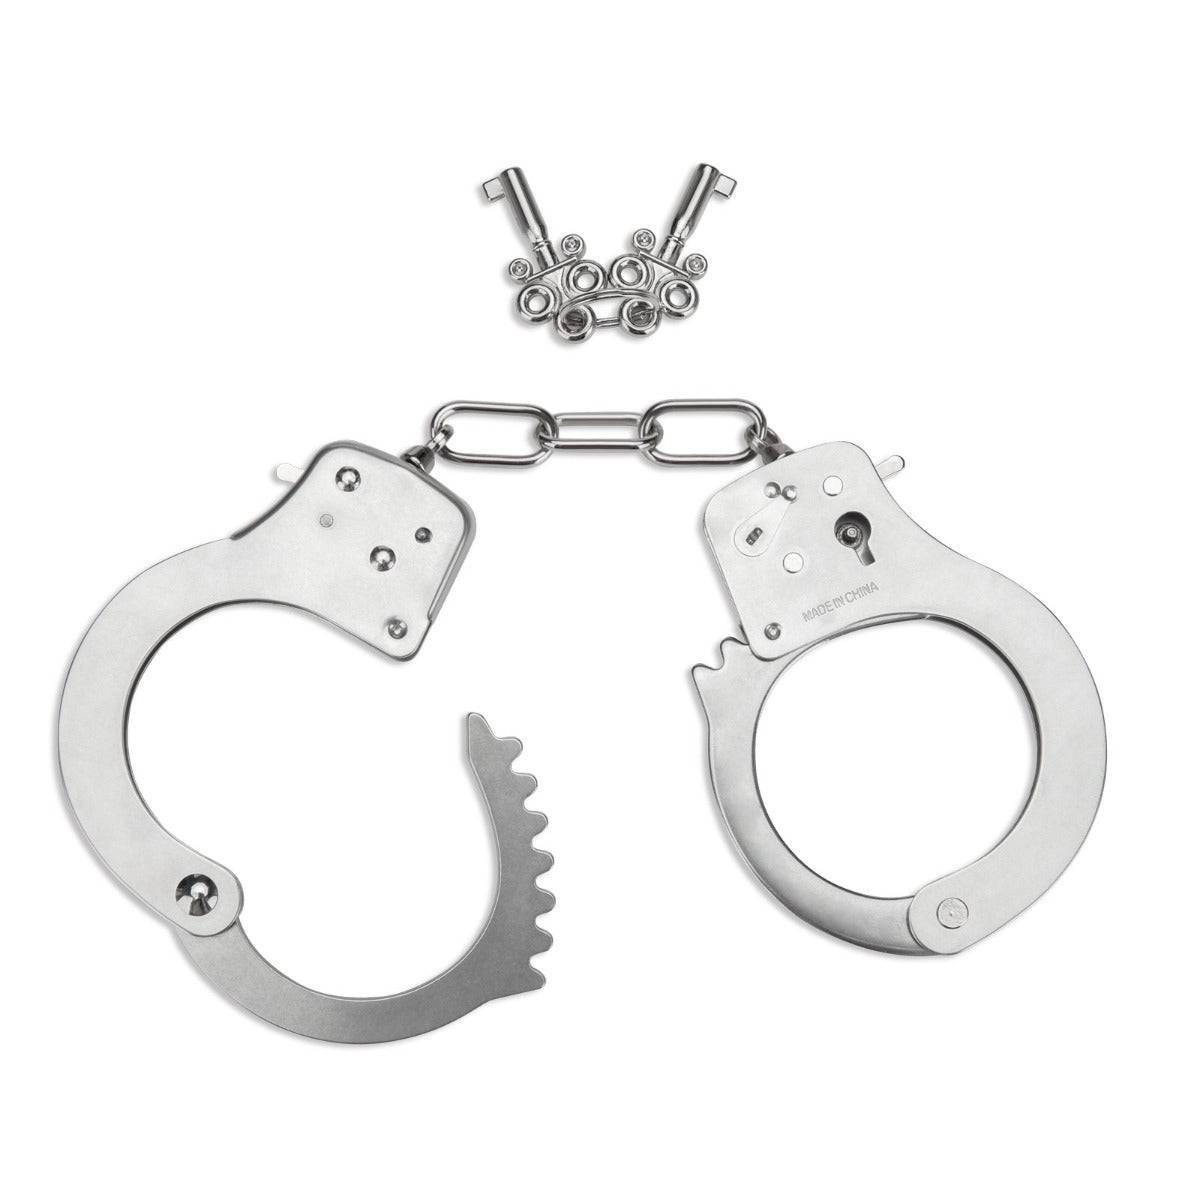 Me You Us Bondage Metal Handcuffs - Simply Pleasure